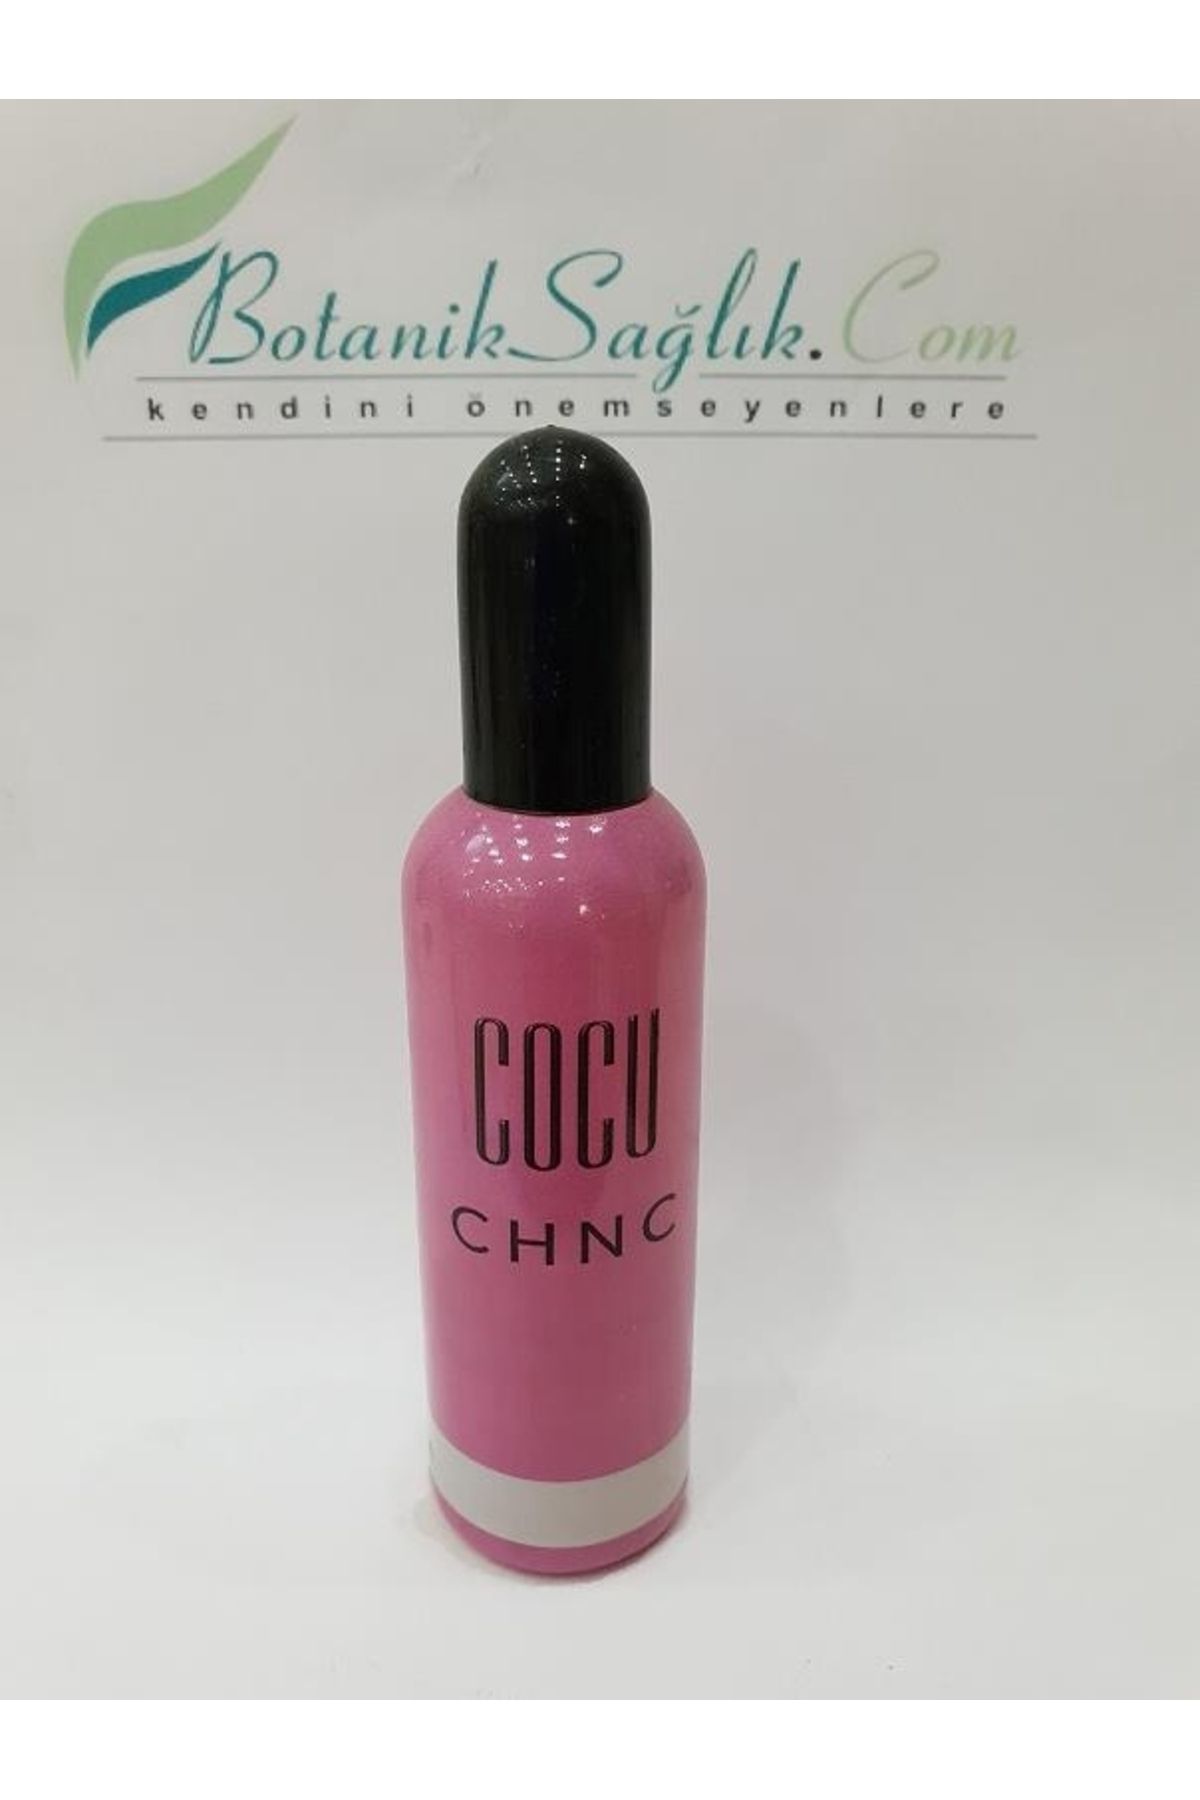 BENQ Cocu Parfüm Chnc K12 - 50 ml